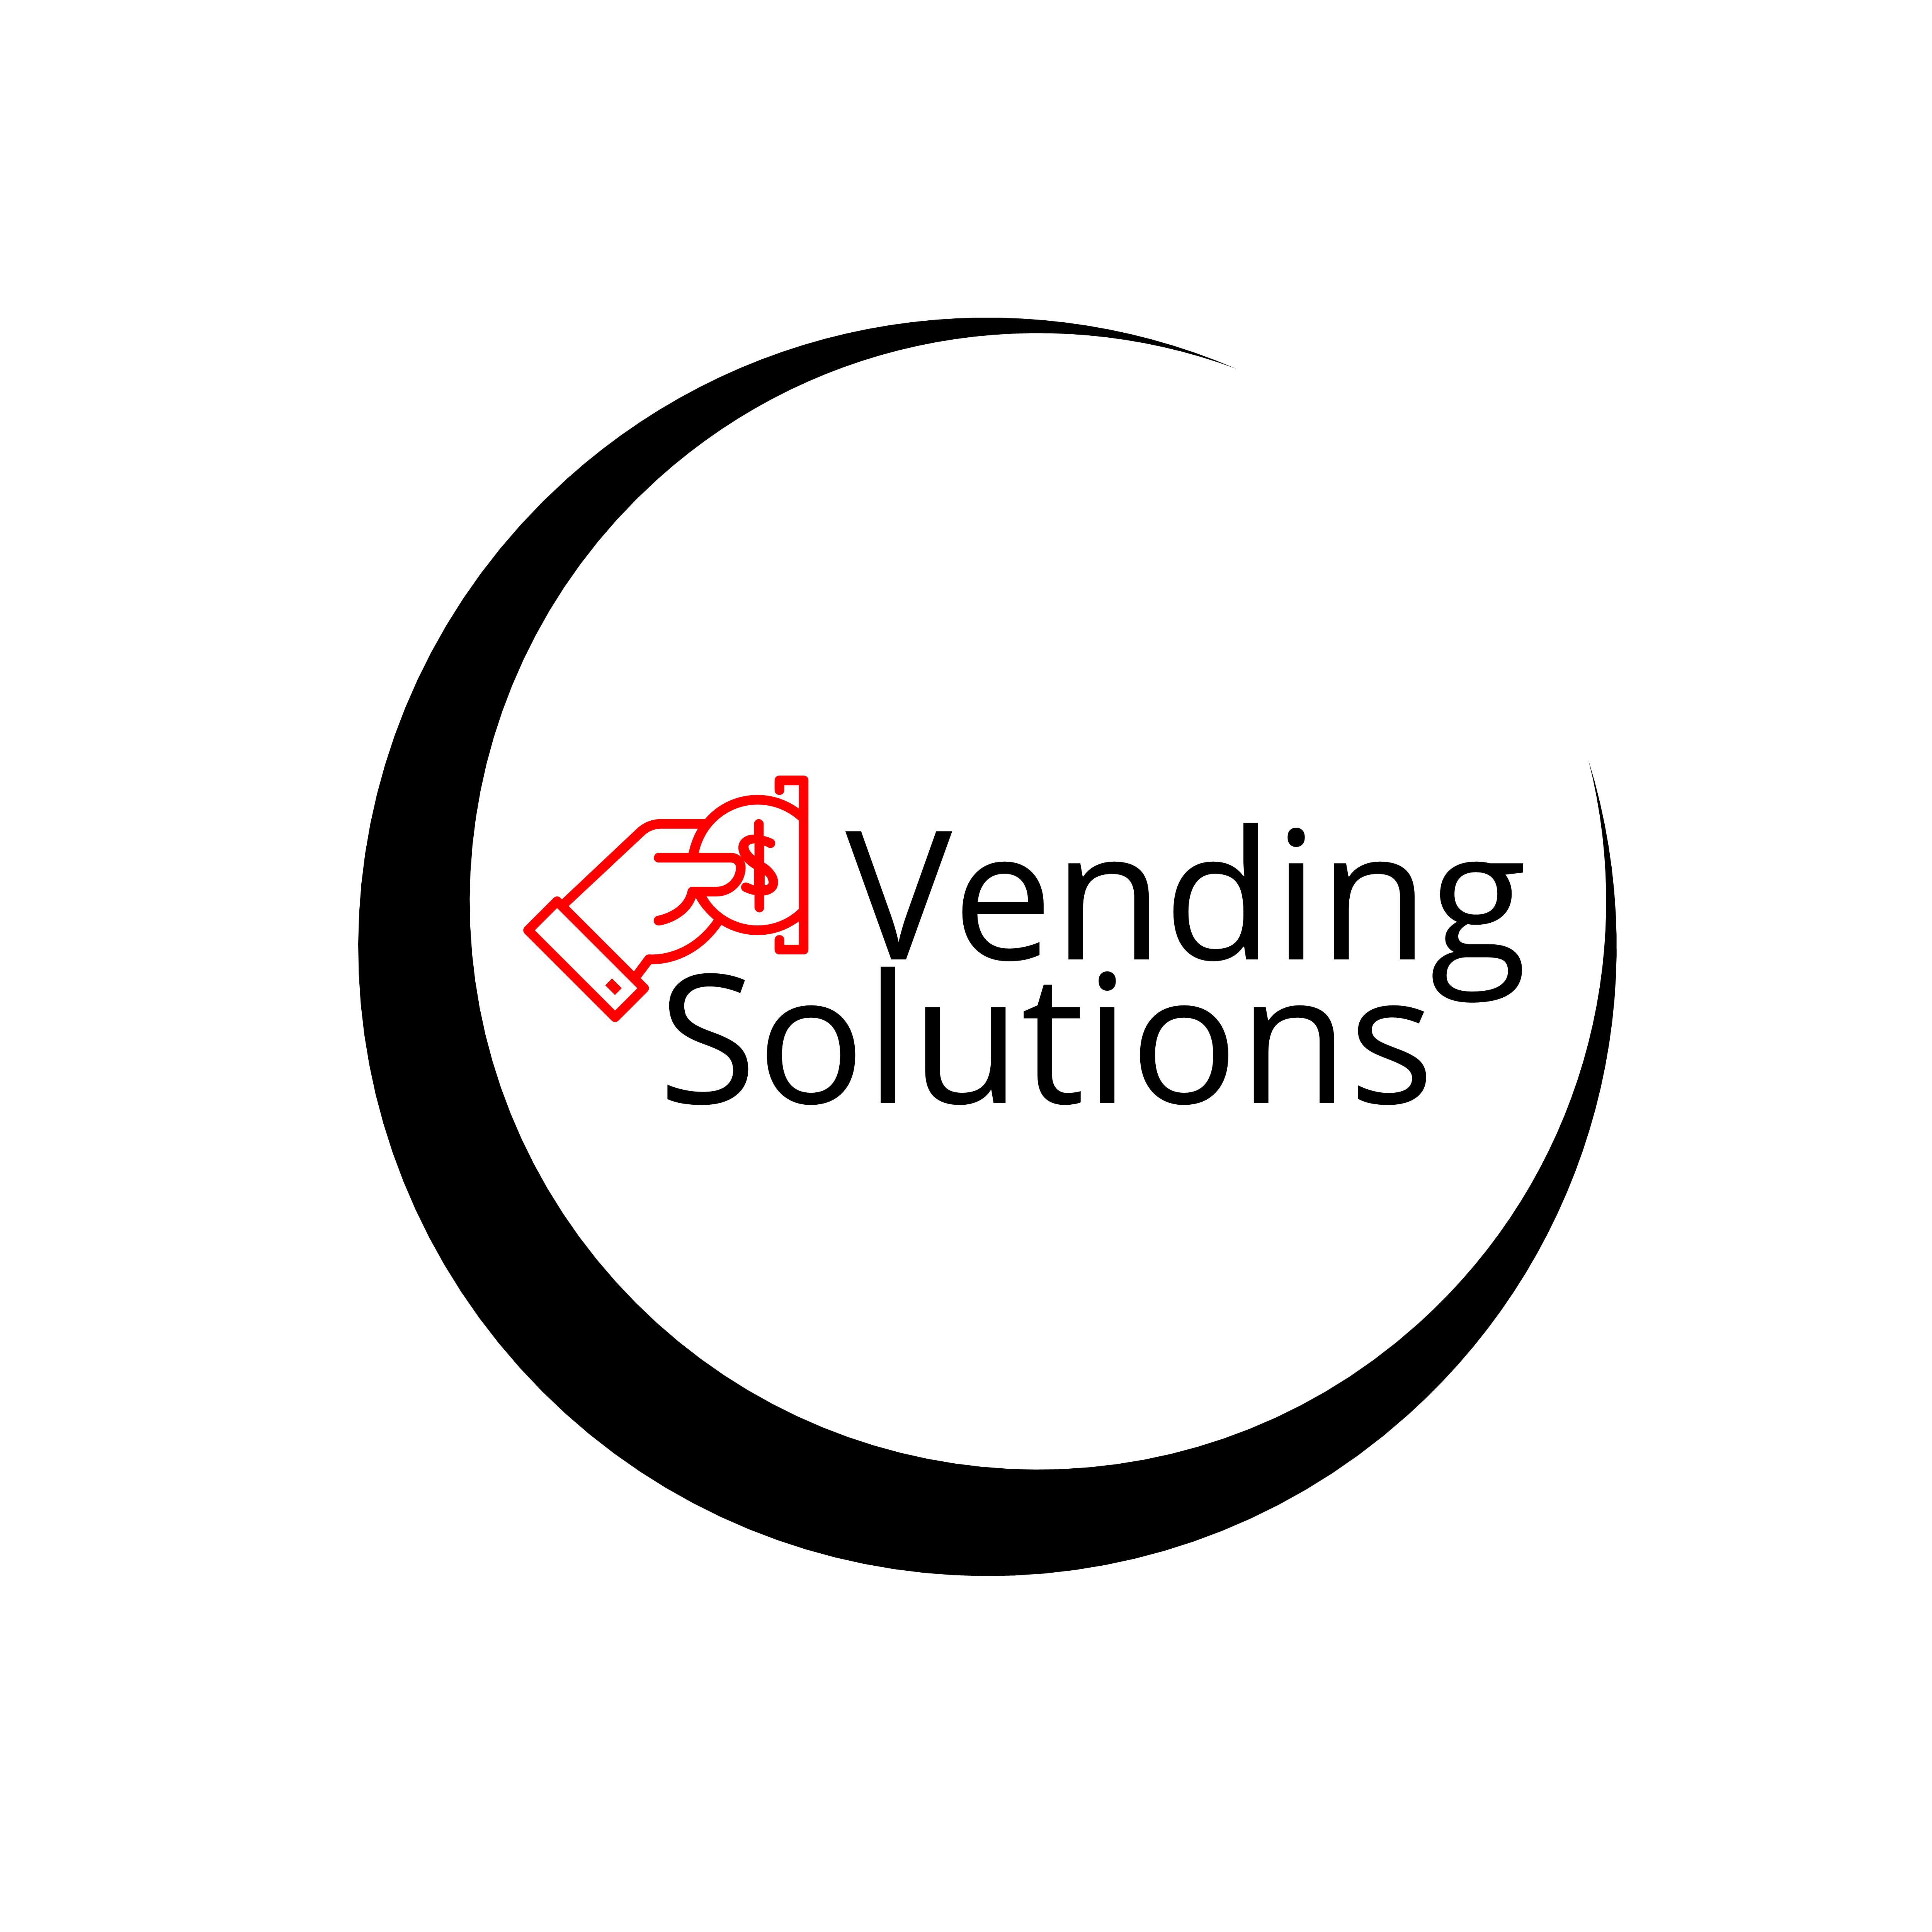 Vending Solutions